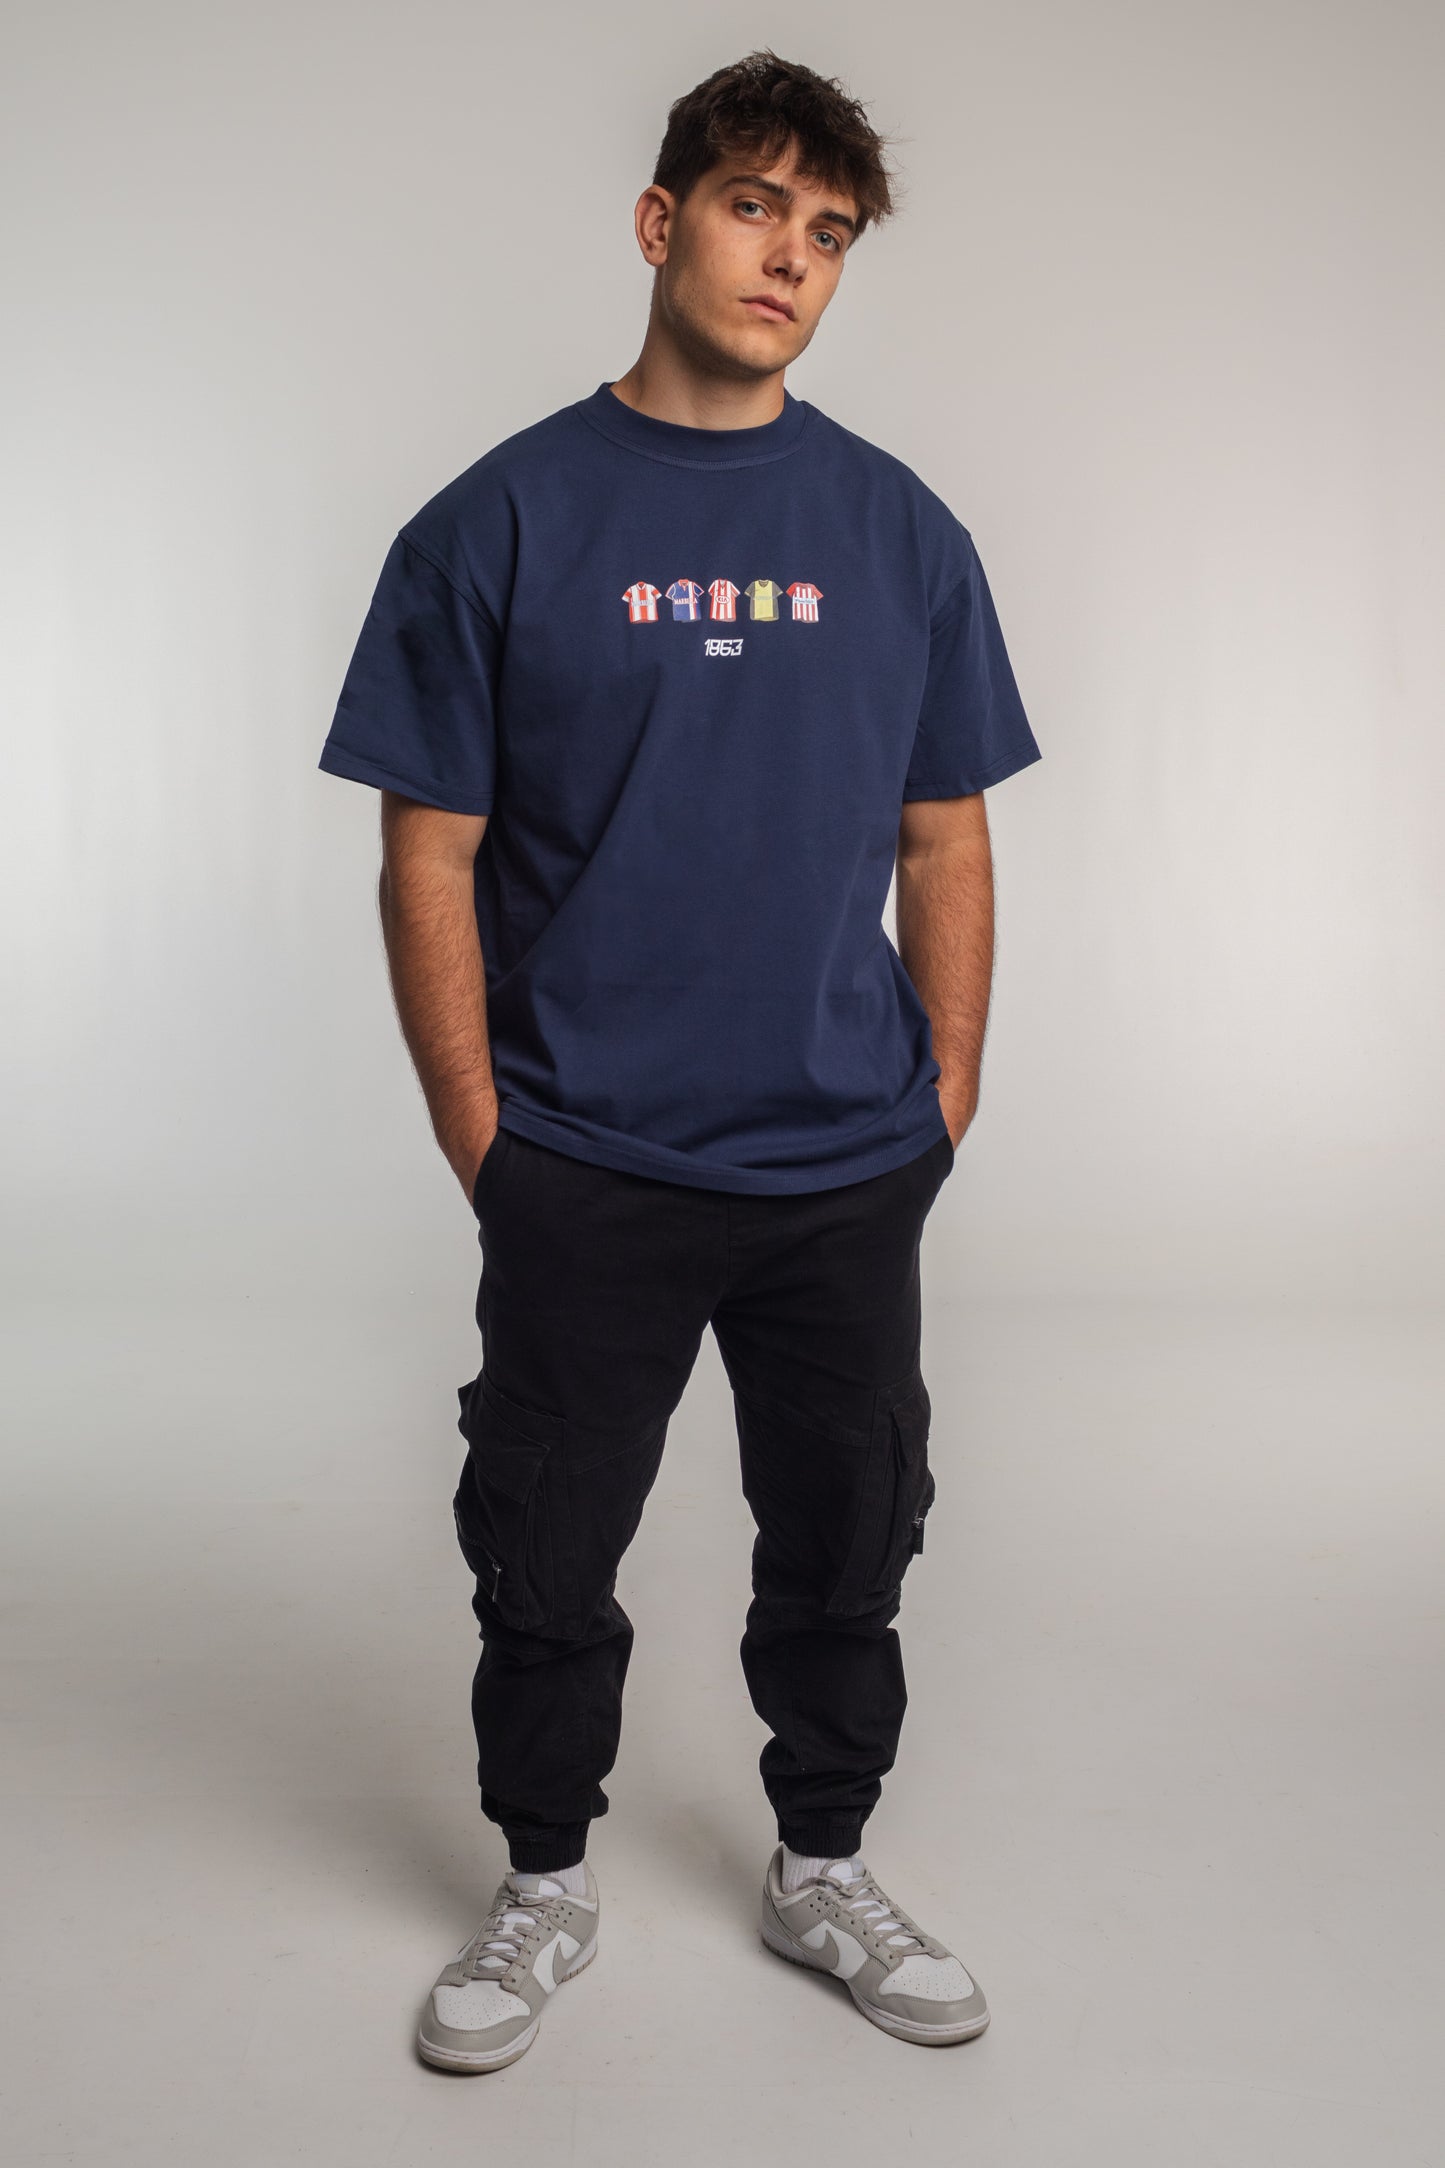 Colchoneros Historical Kits T-shirt - Navy Blue